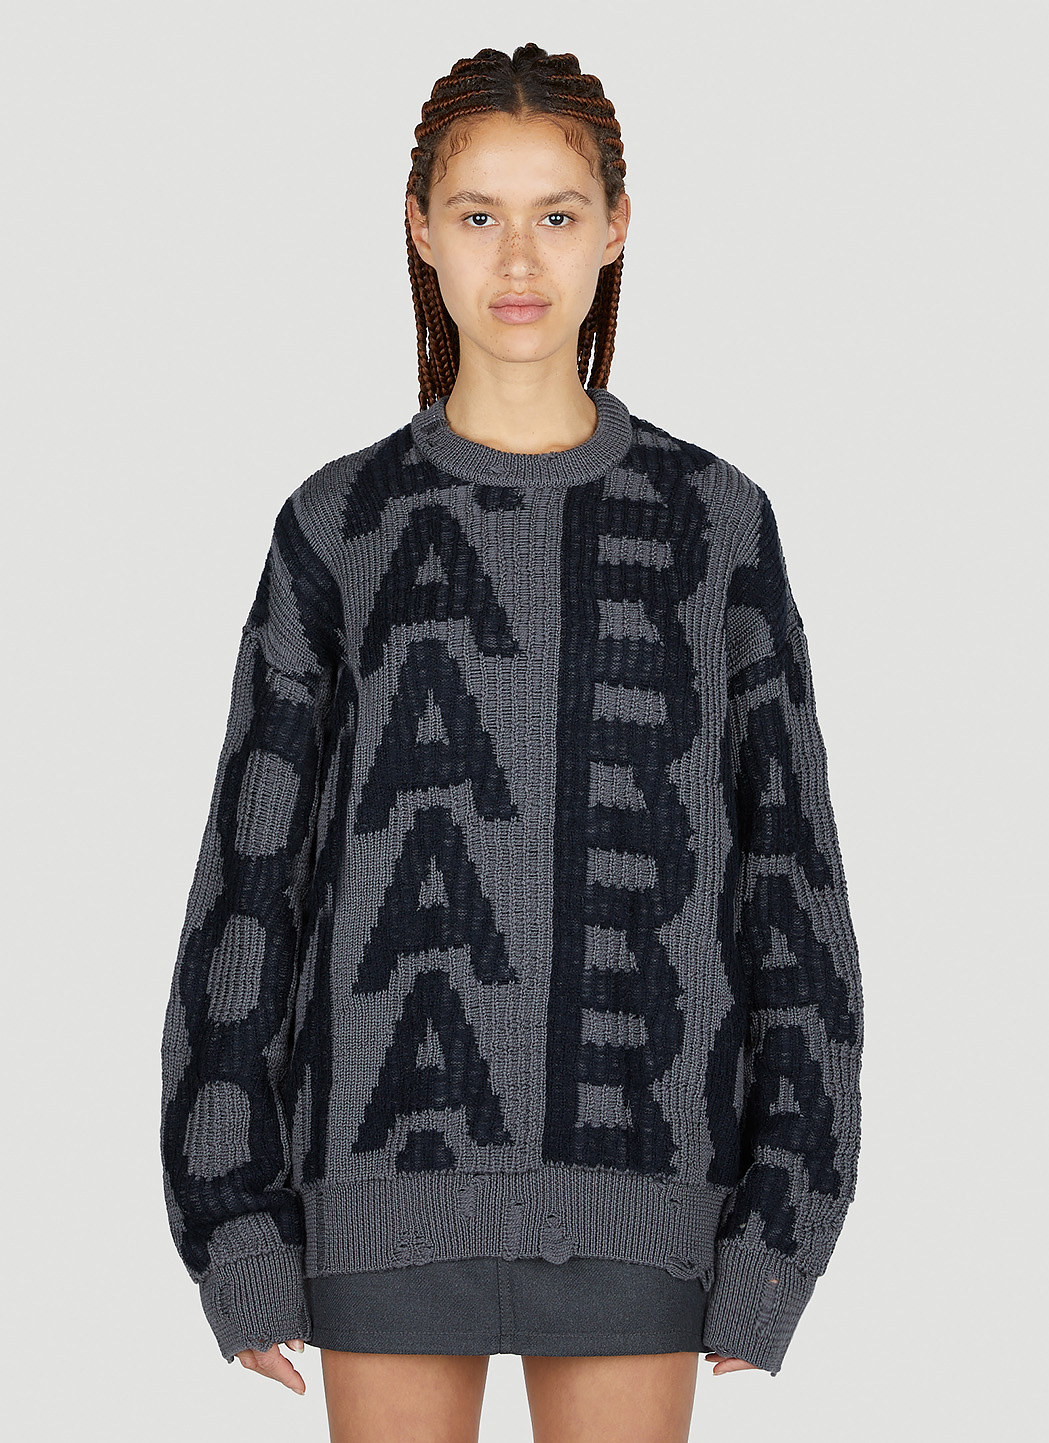 Monogram Distressed Sweater